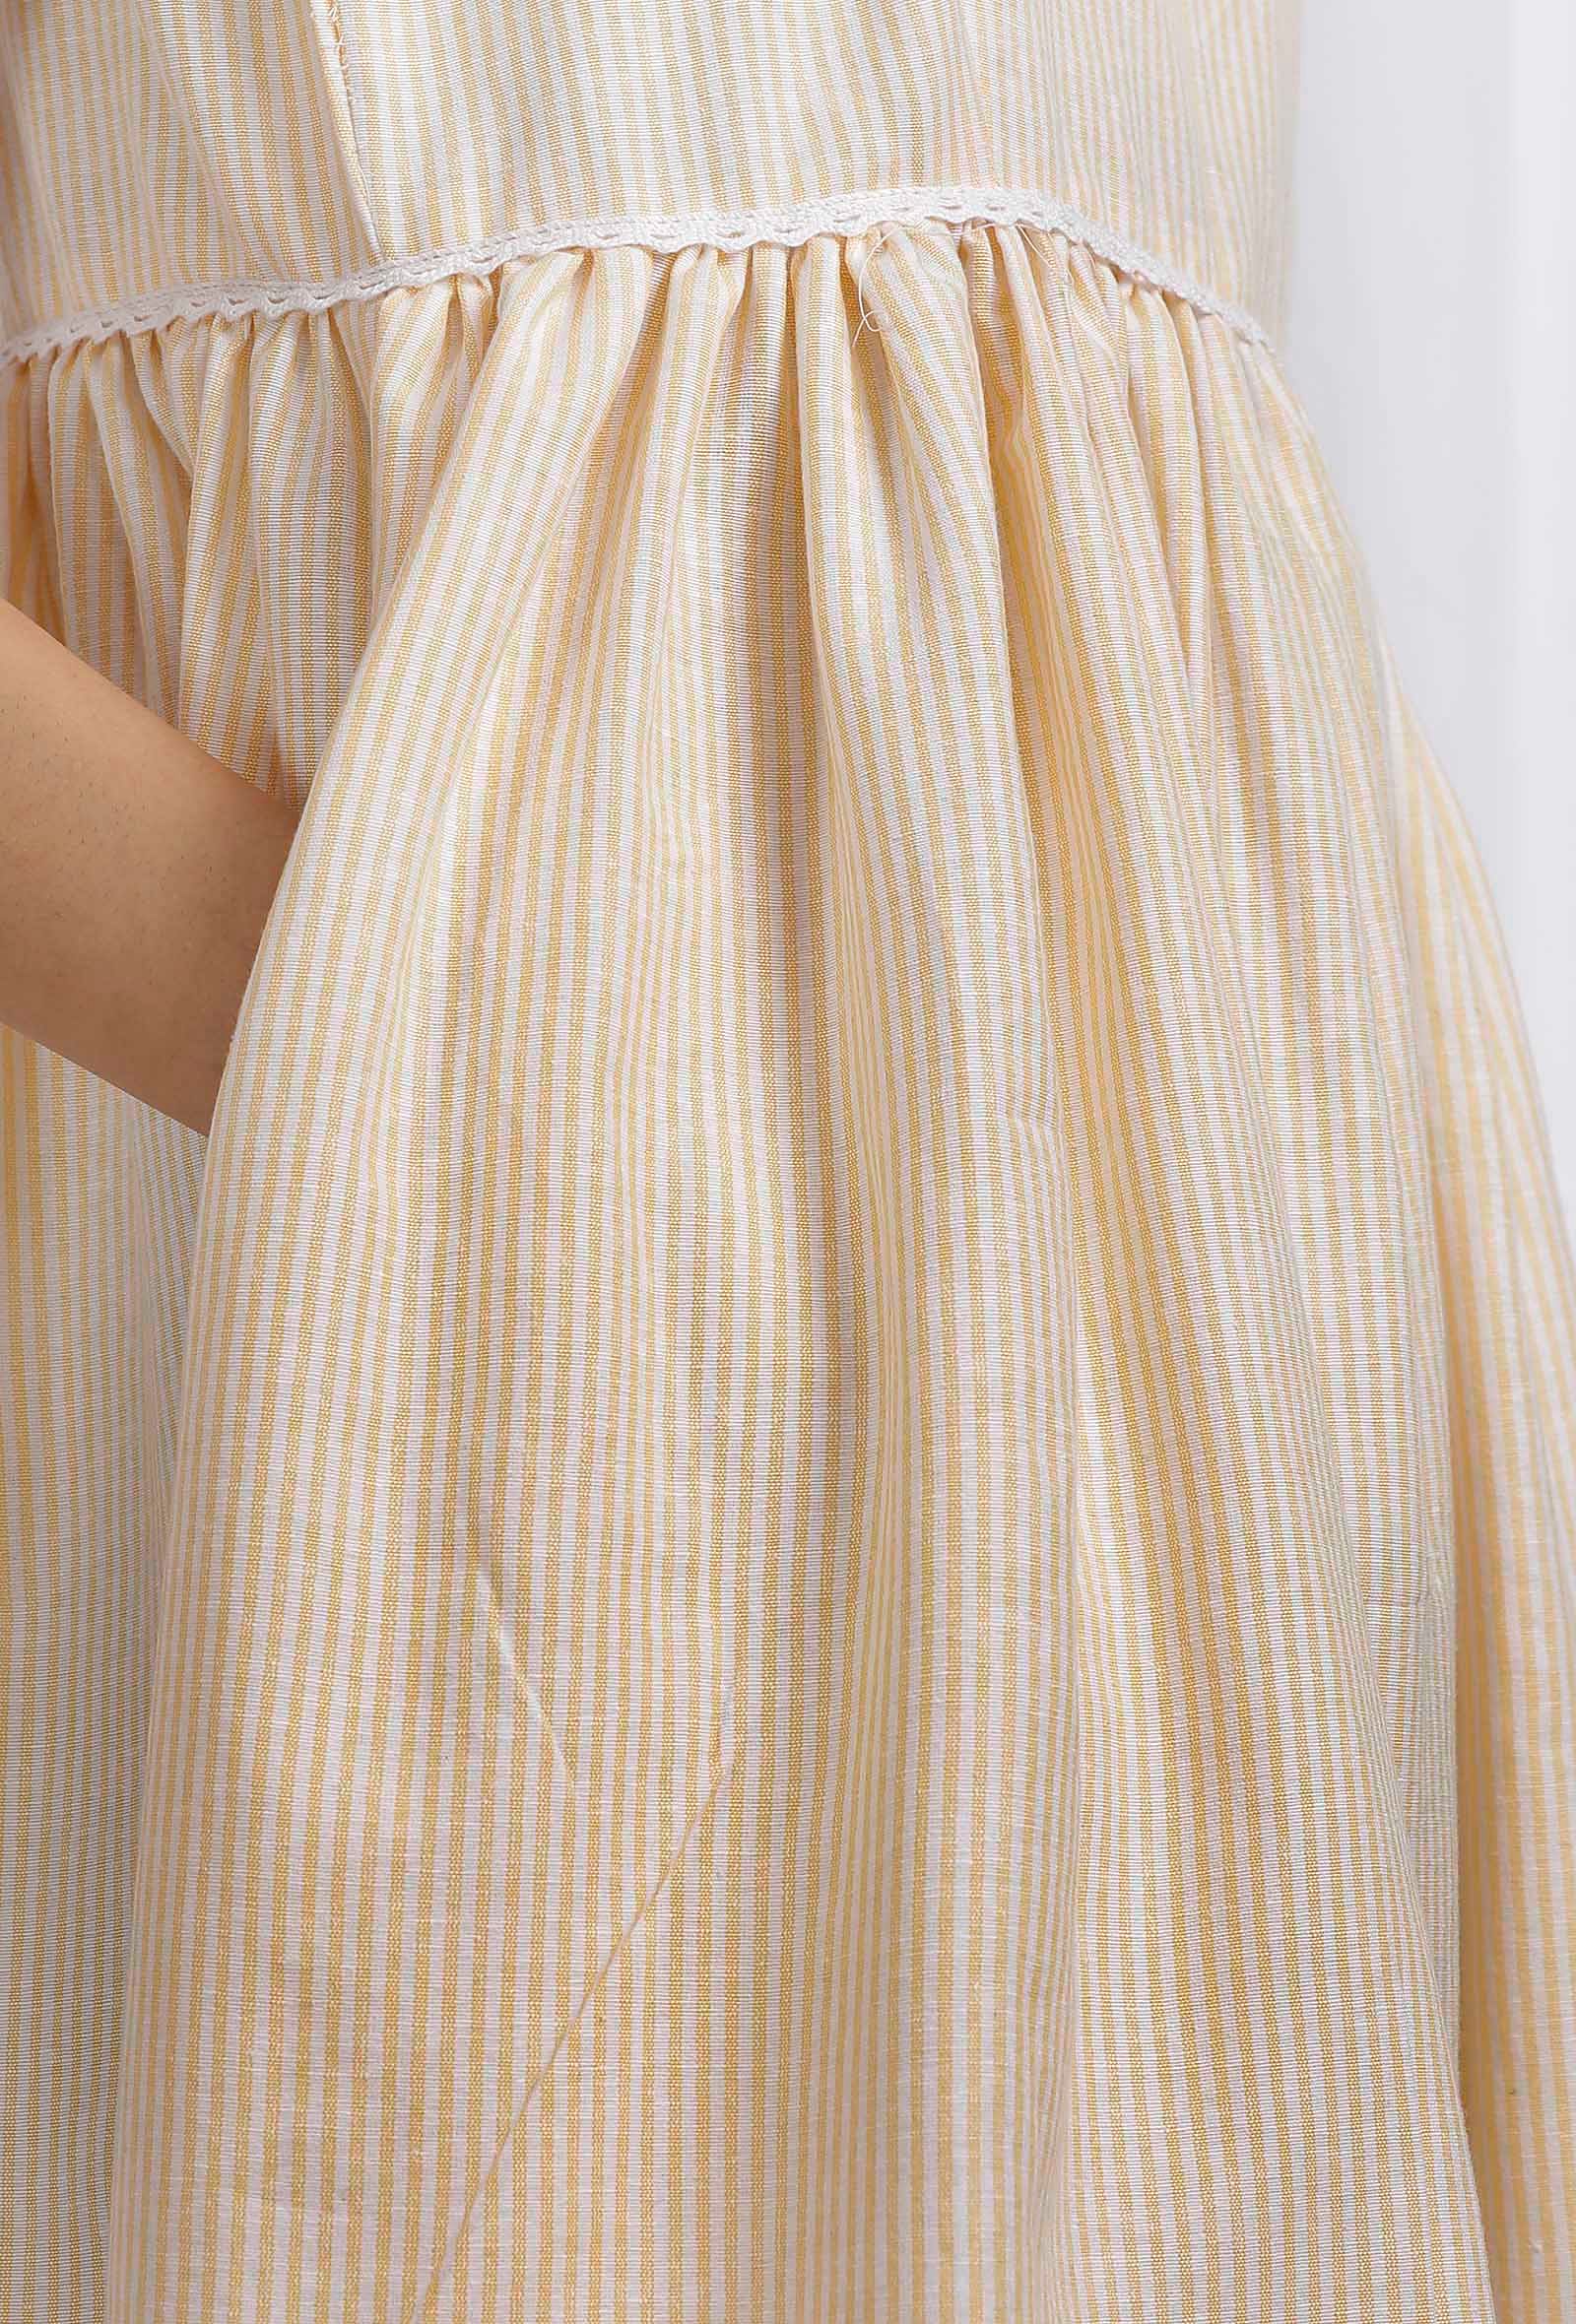 Yellow Cotton Striped Flared Dress